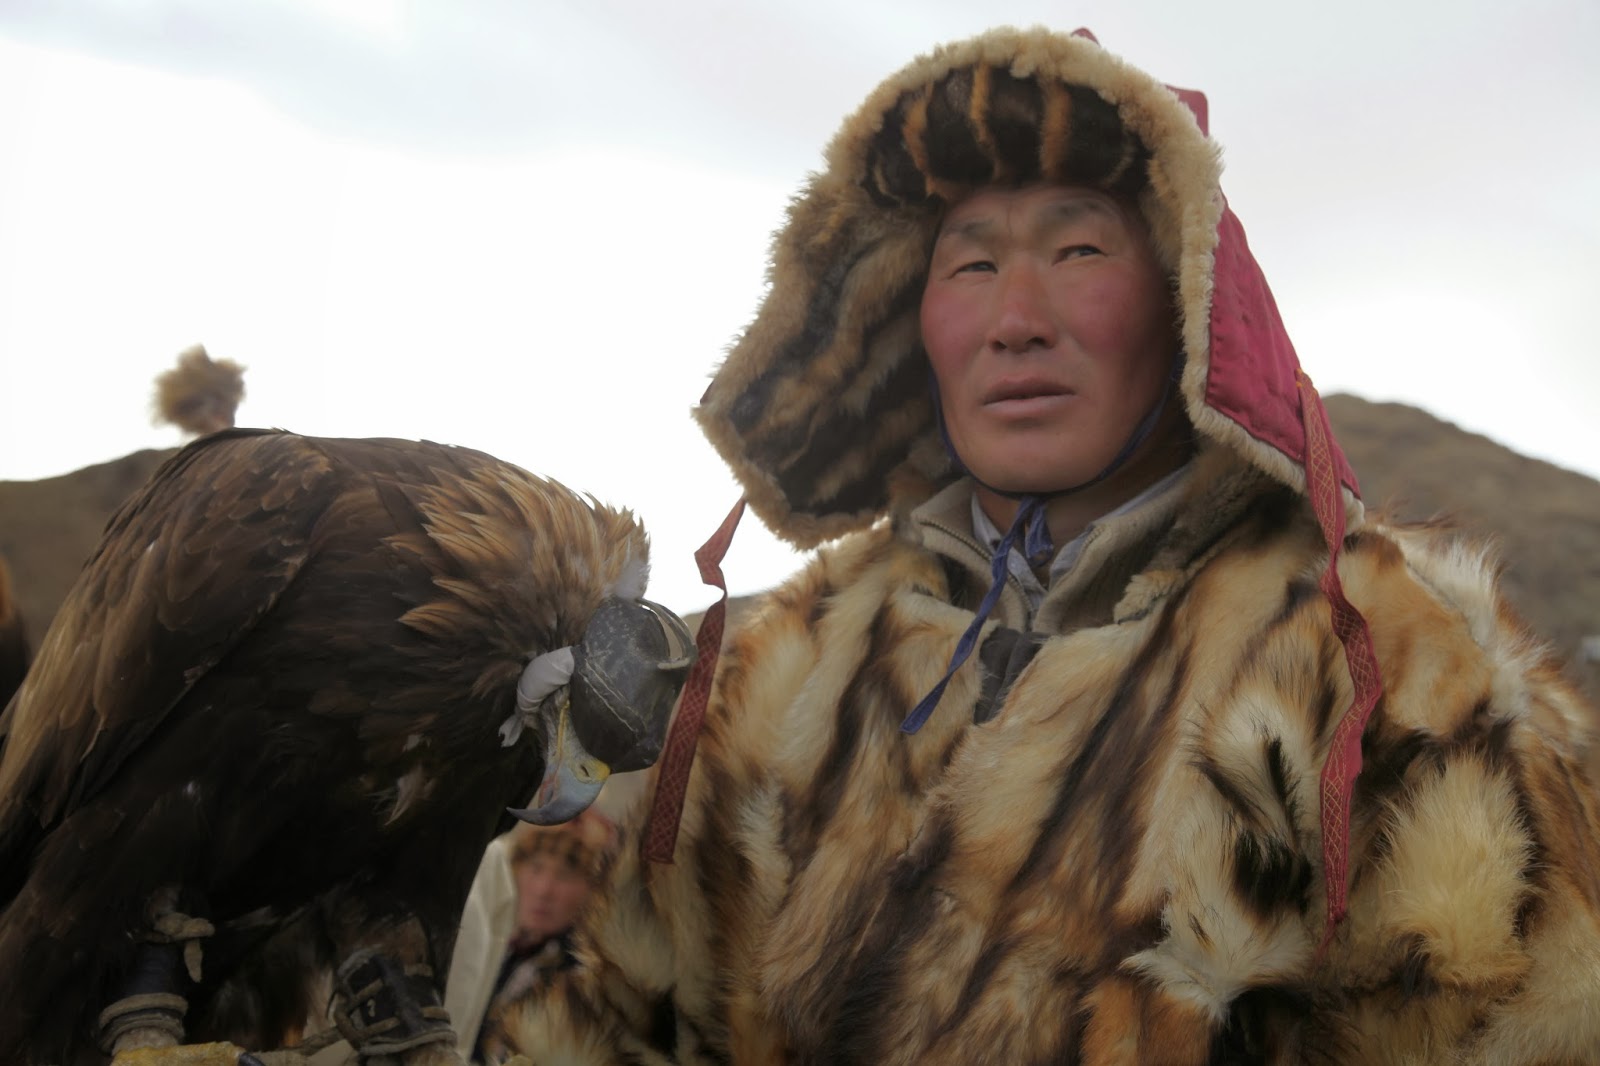 Musings in Mongolia: The Golden Eagle Festival - Bayan Olgii, Mongolia 2013